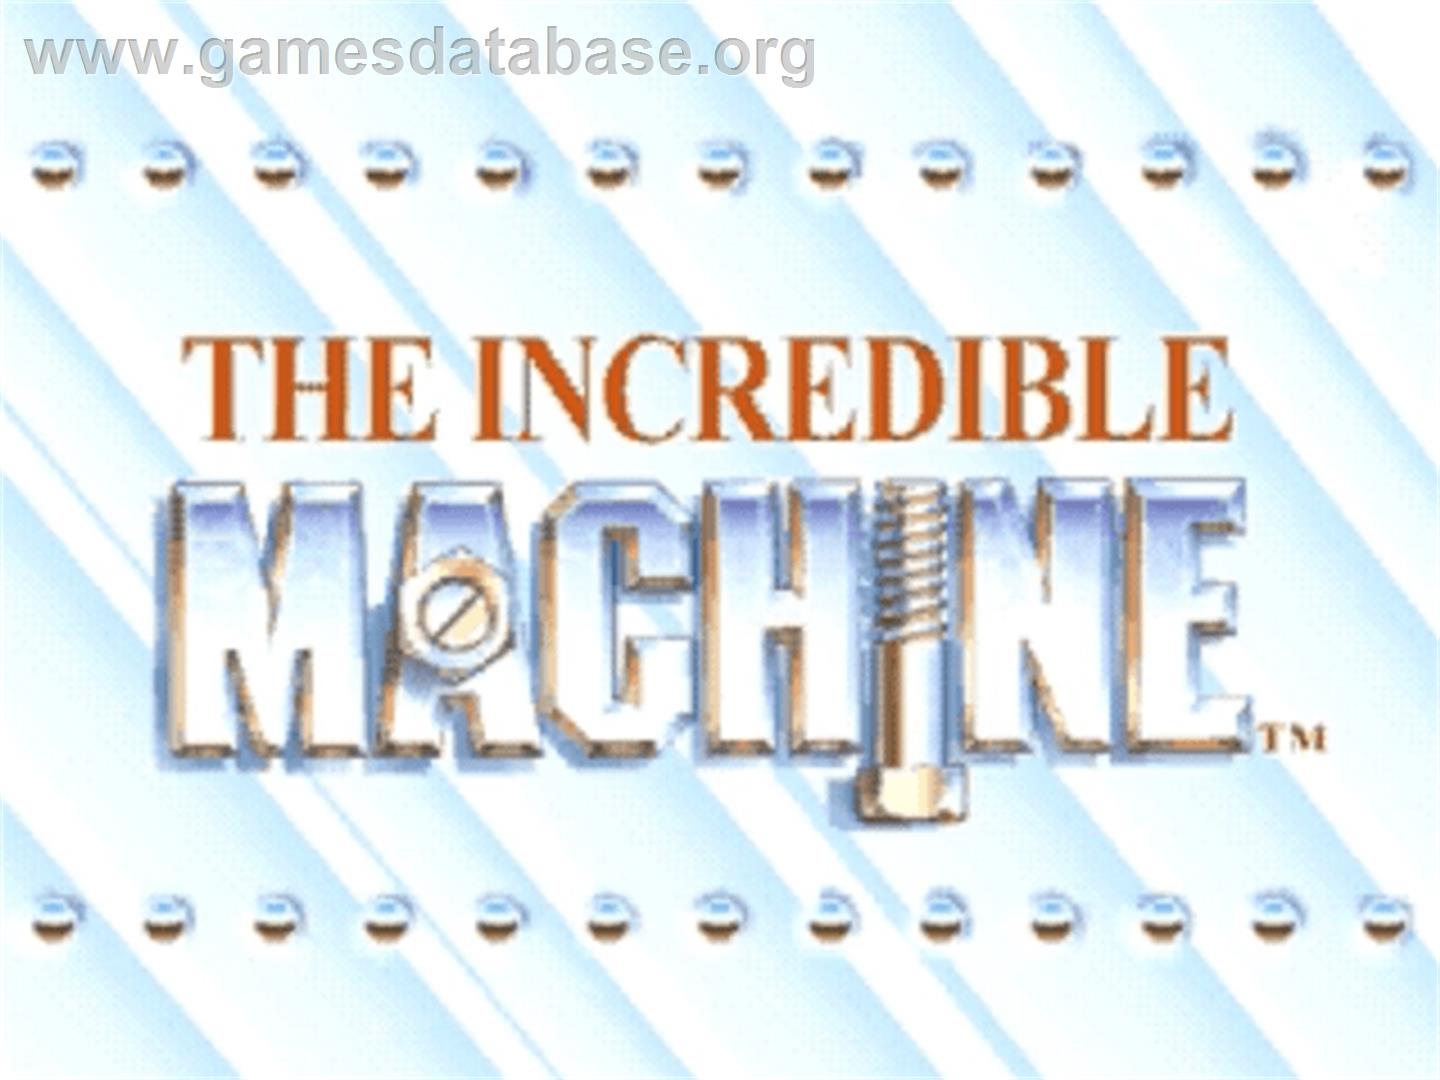 Incredible Machine - Panasonic 3DO - Artwork - Title Screen